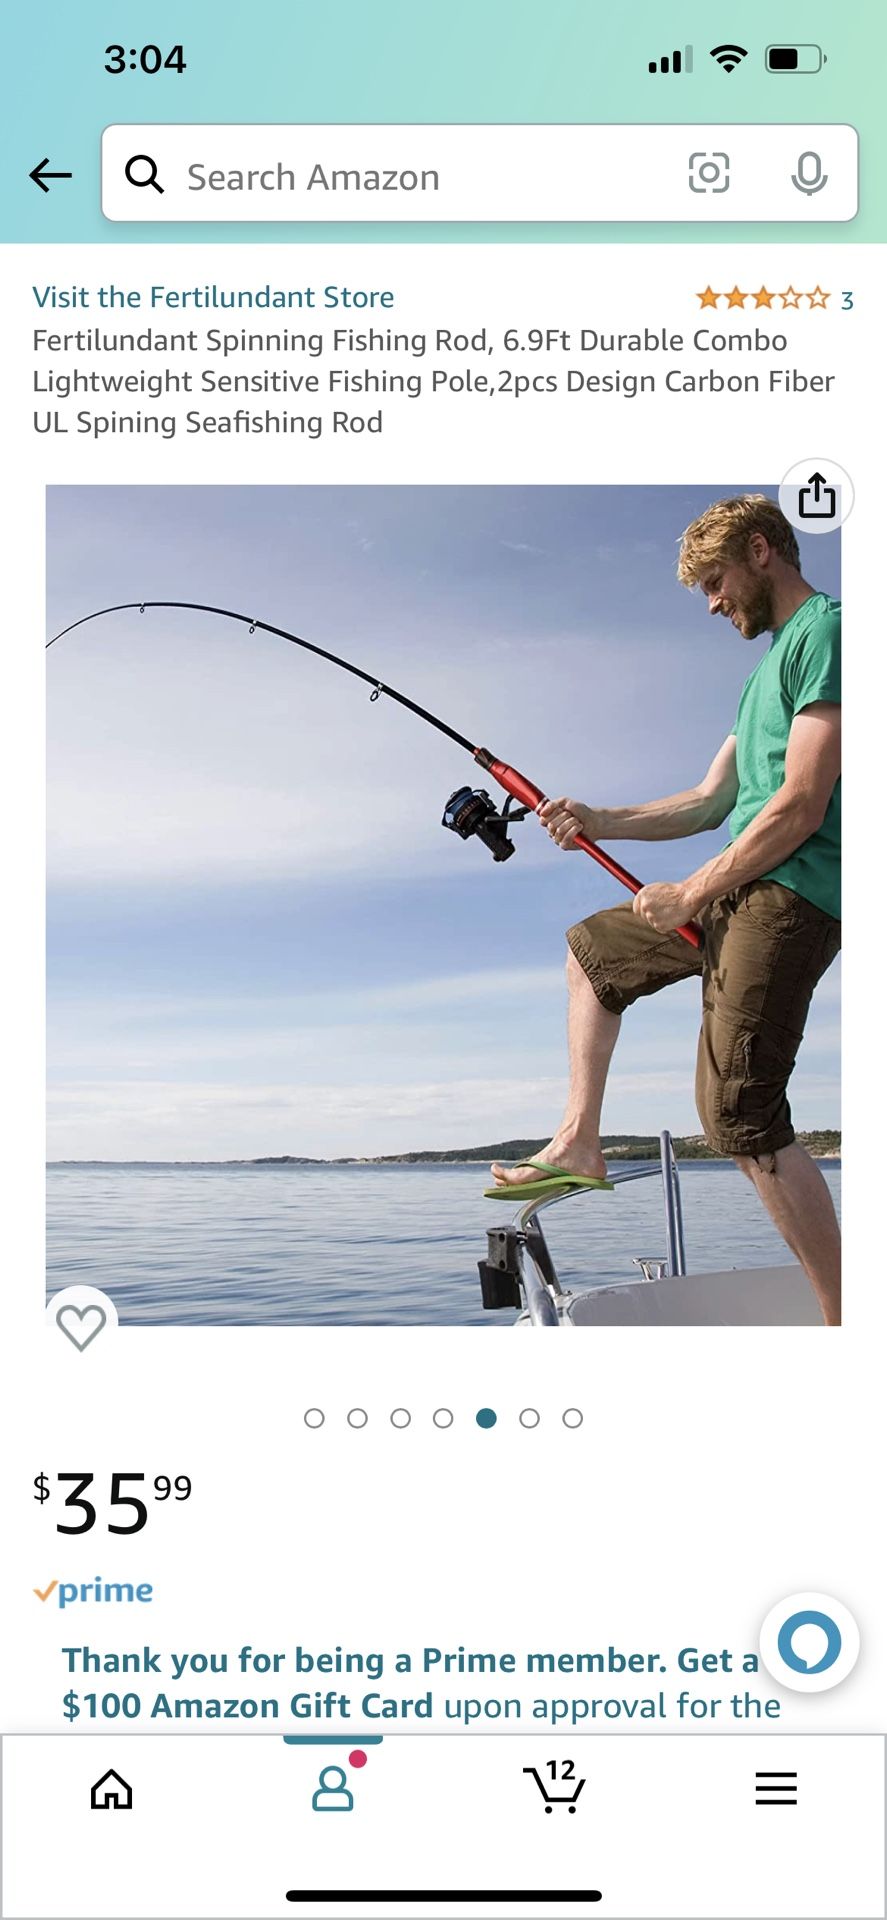 Fertilundant Spinning Fishing Rod, 6.9Ft Durable Combo Lightweight Sensitive Fishing Pole,2pcs Design Carbon Fiber UL Spining Seafishing Rod